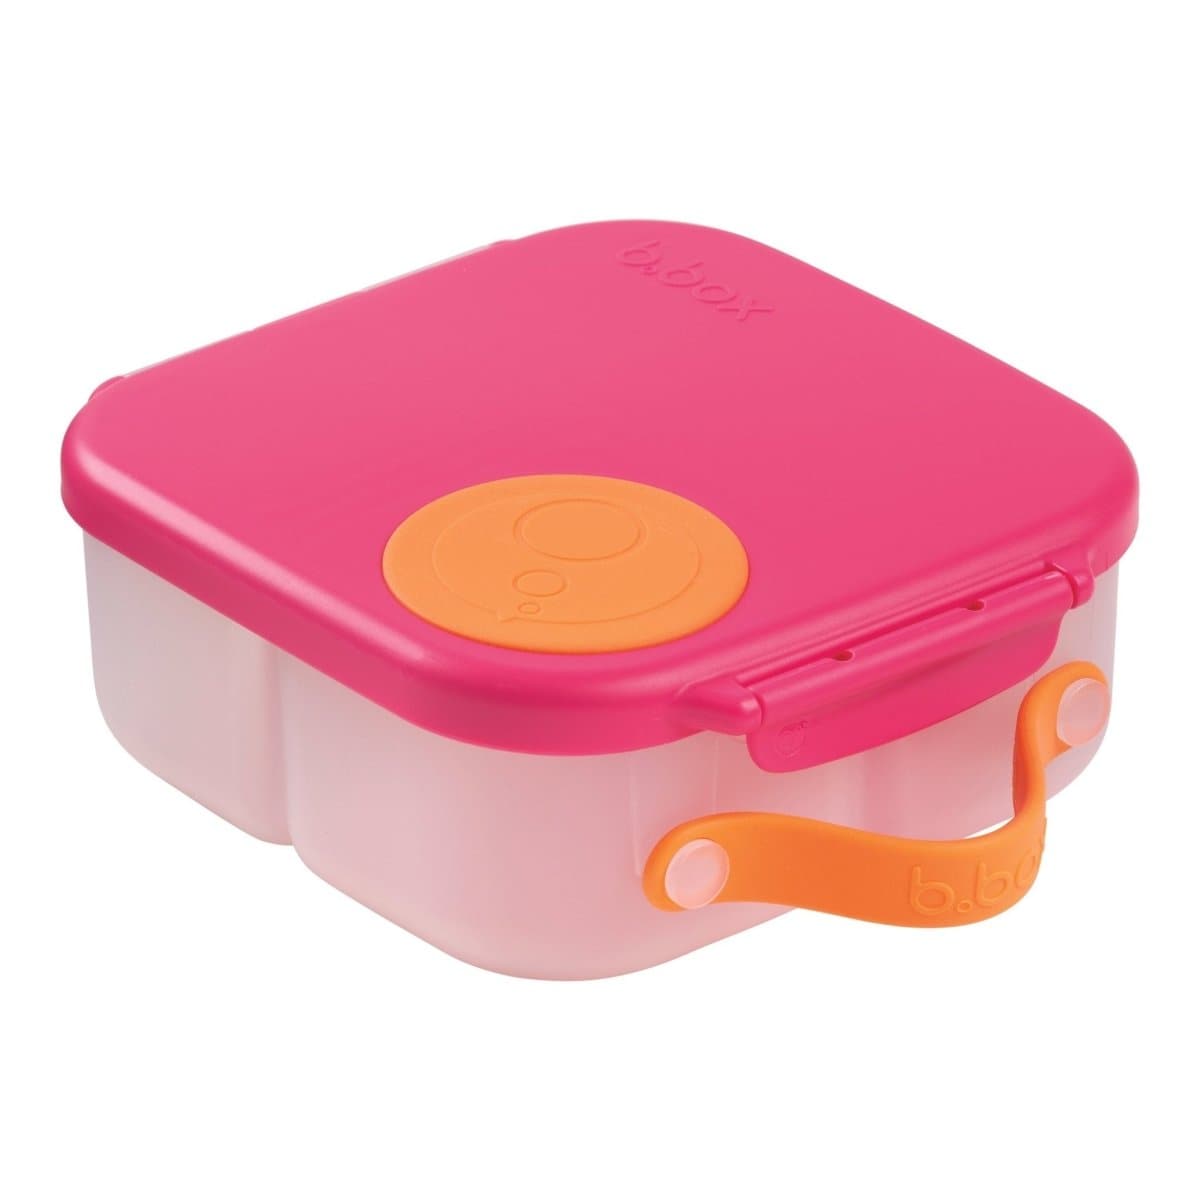 B.Box Mini Lunch Box - Strawberry Shake Pink Orange - 661